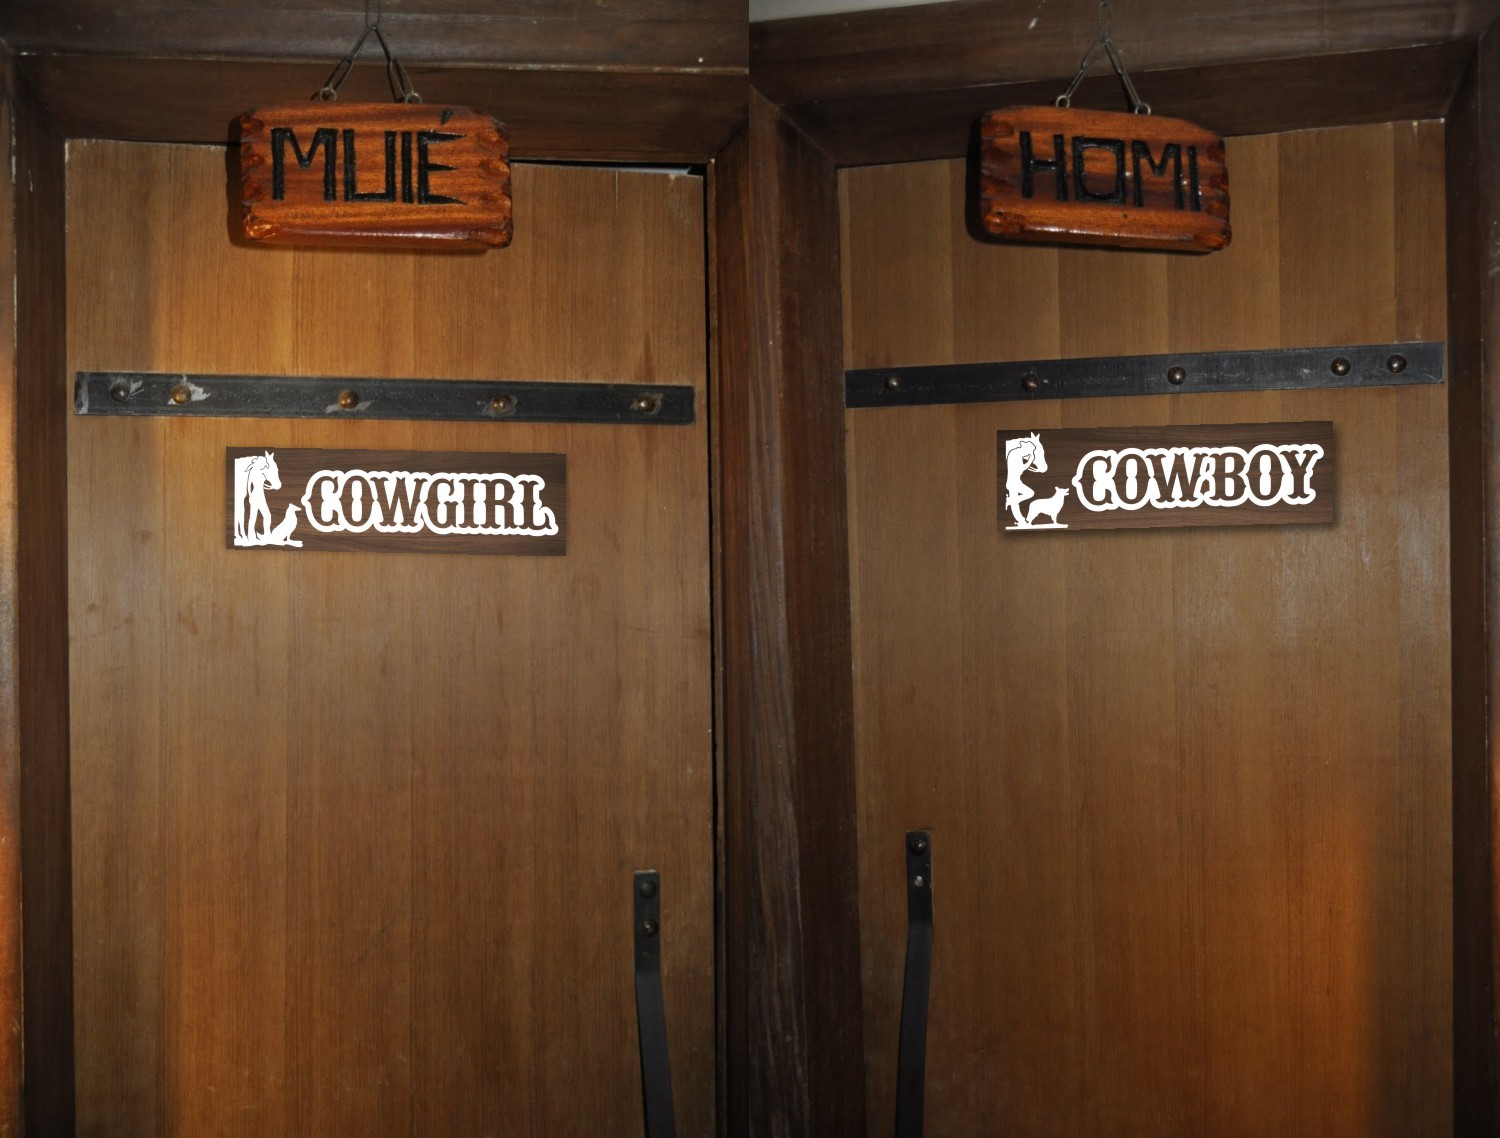 Placa Banheiro - Conjunto Cowboy + Cowgirl